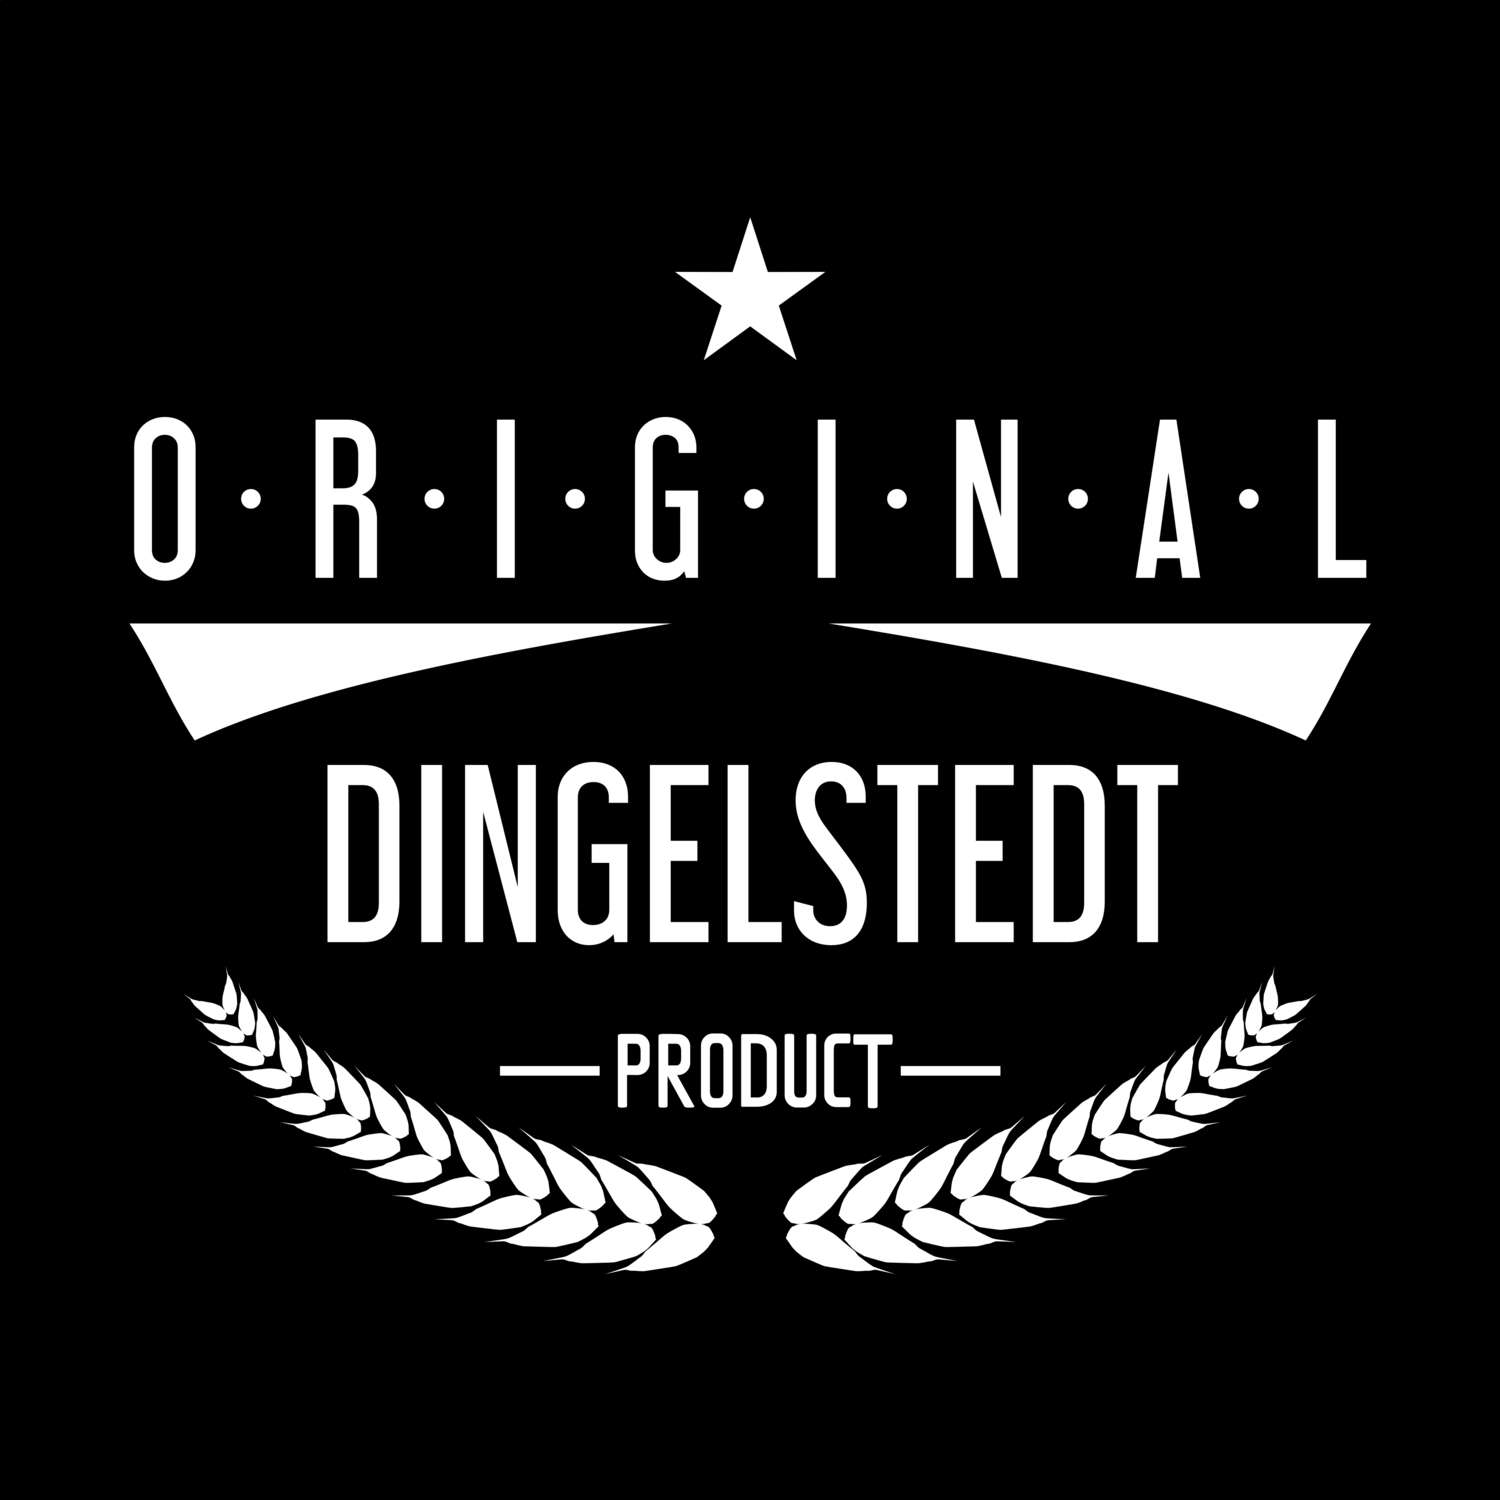 Dingelstedt T-Shirt »Original Product«